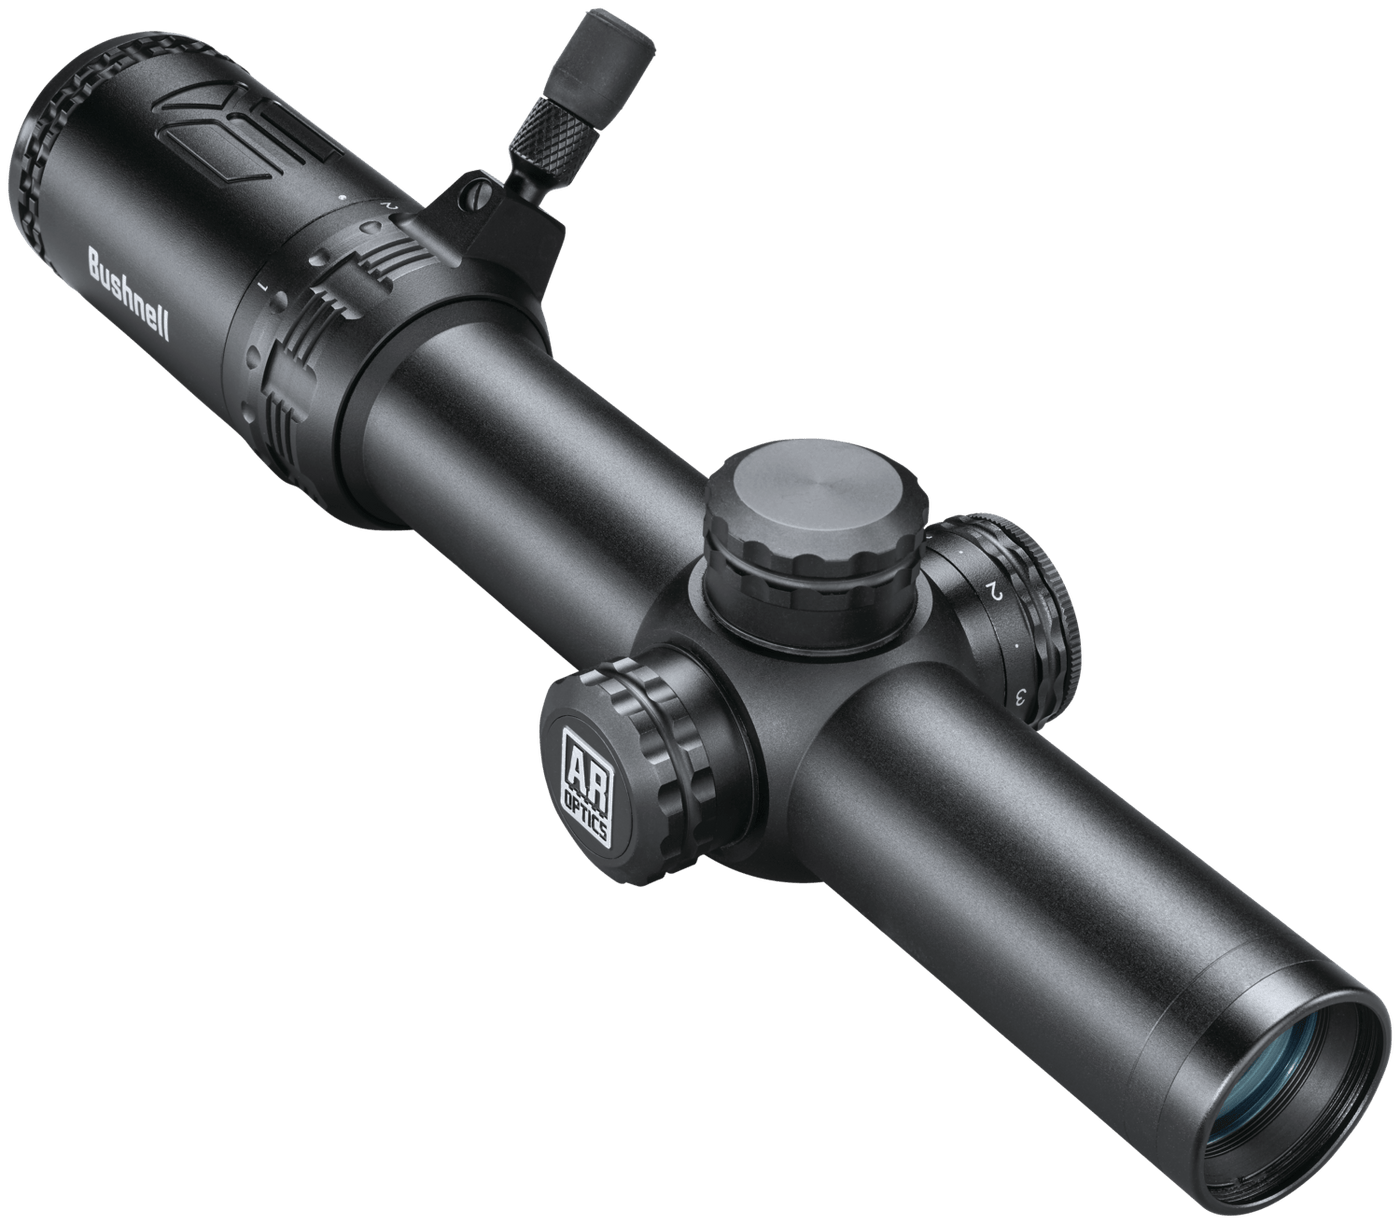 Bushnell Bushnell Ar Optics Riflescope Black 1-6x24 Btr-1 Optics and Accessories